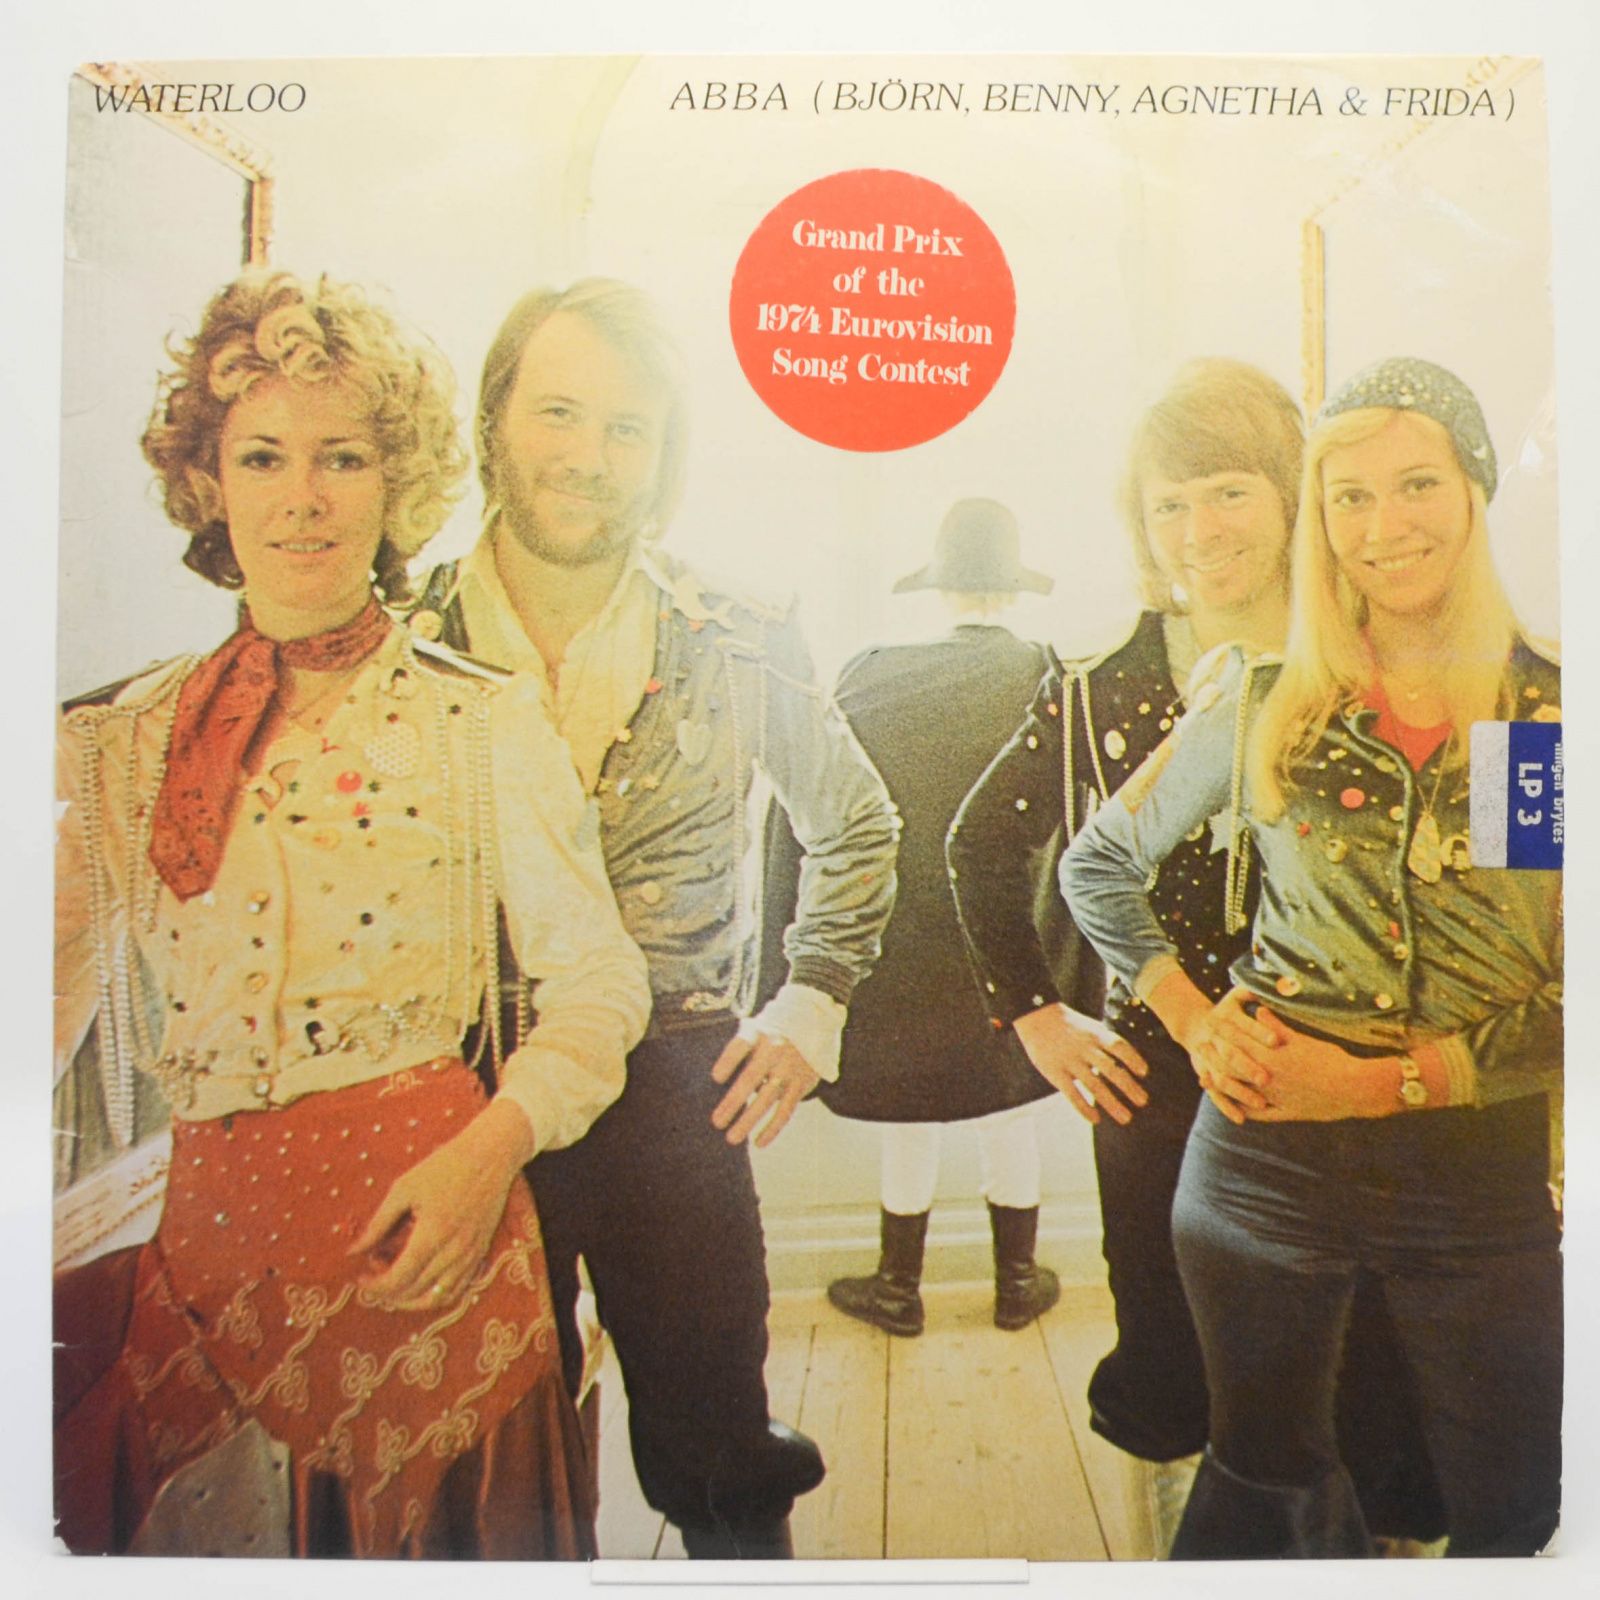 ABBA, Björn, Benny, Agnetha & Frida — Waterloo (1-st, Sweden), 1974